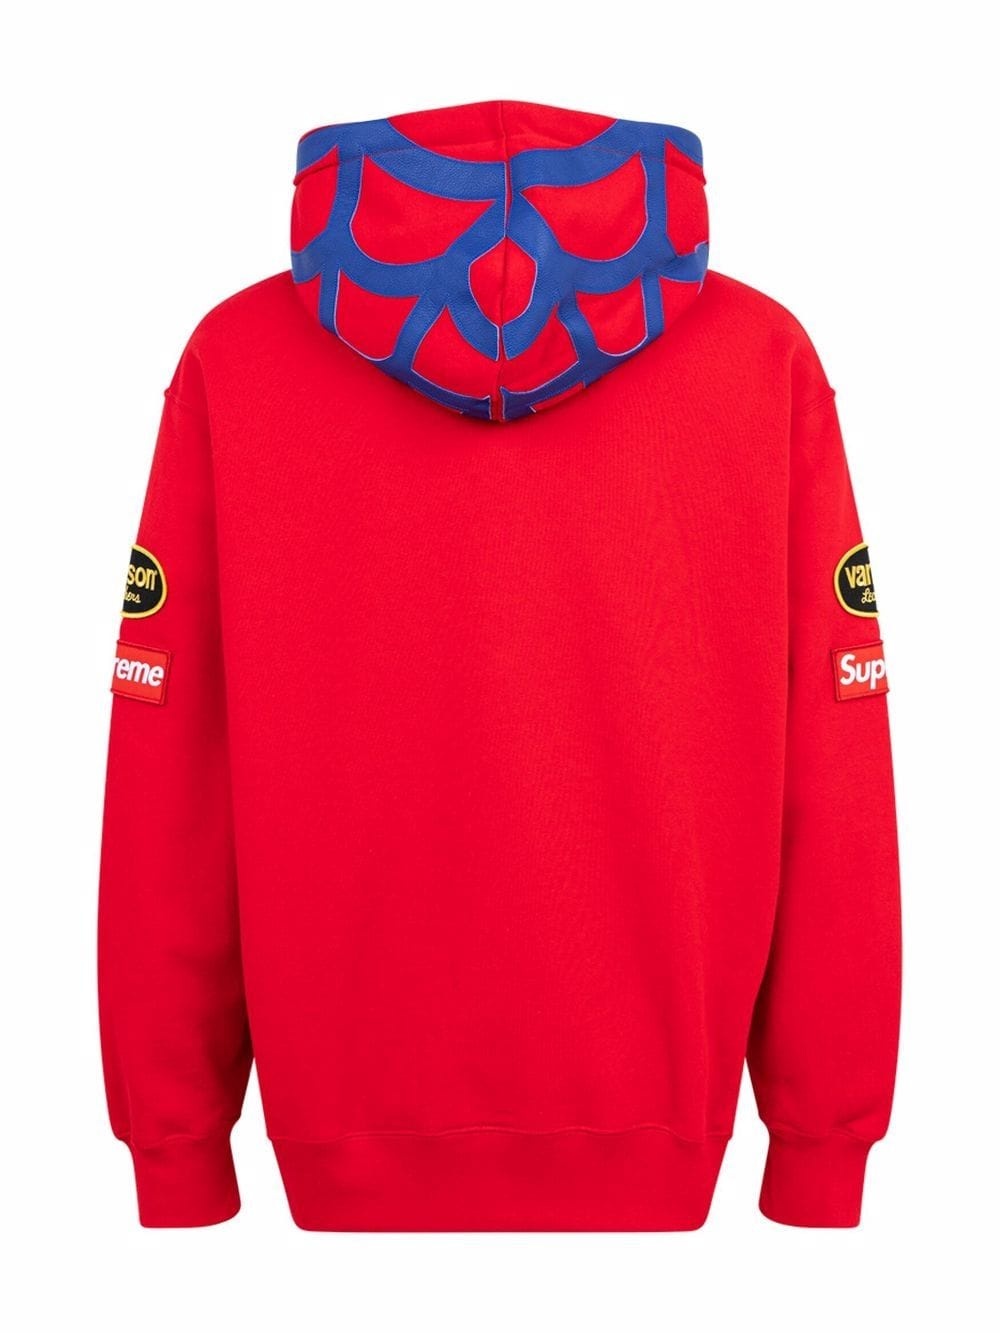 x Vanson Leathers Spider zip-up hoodie - 2